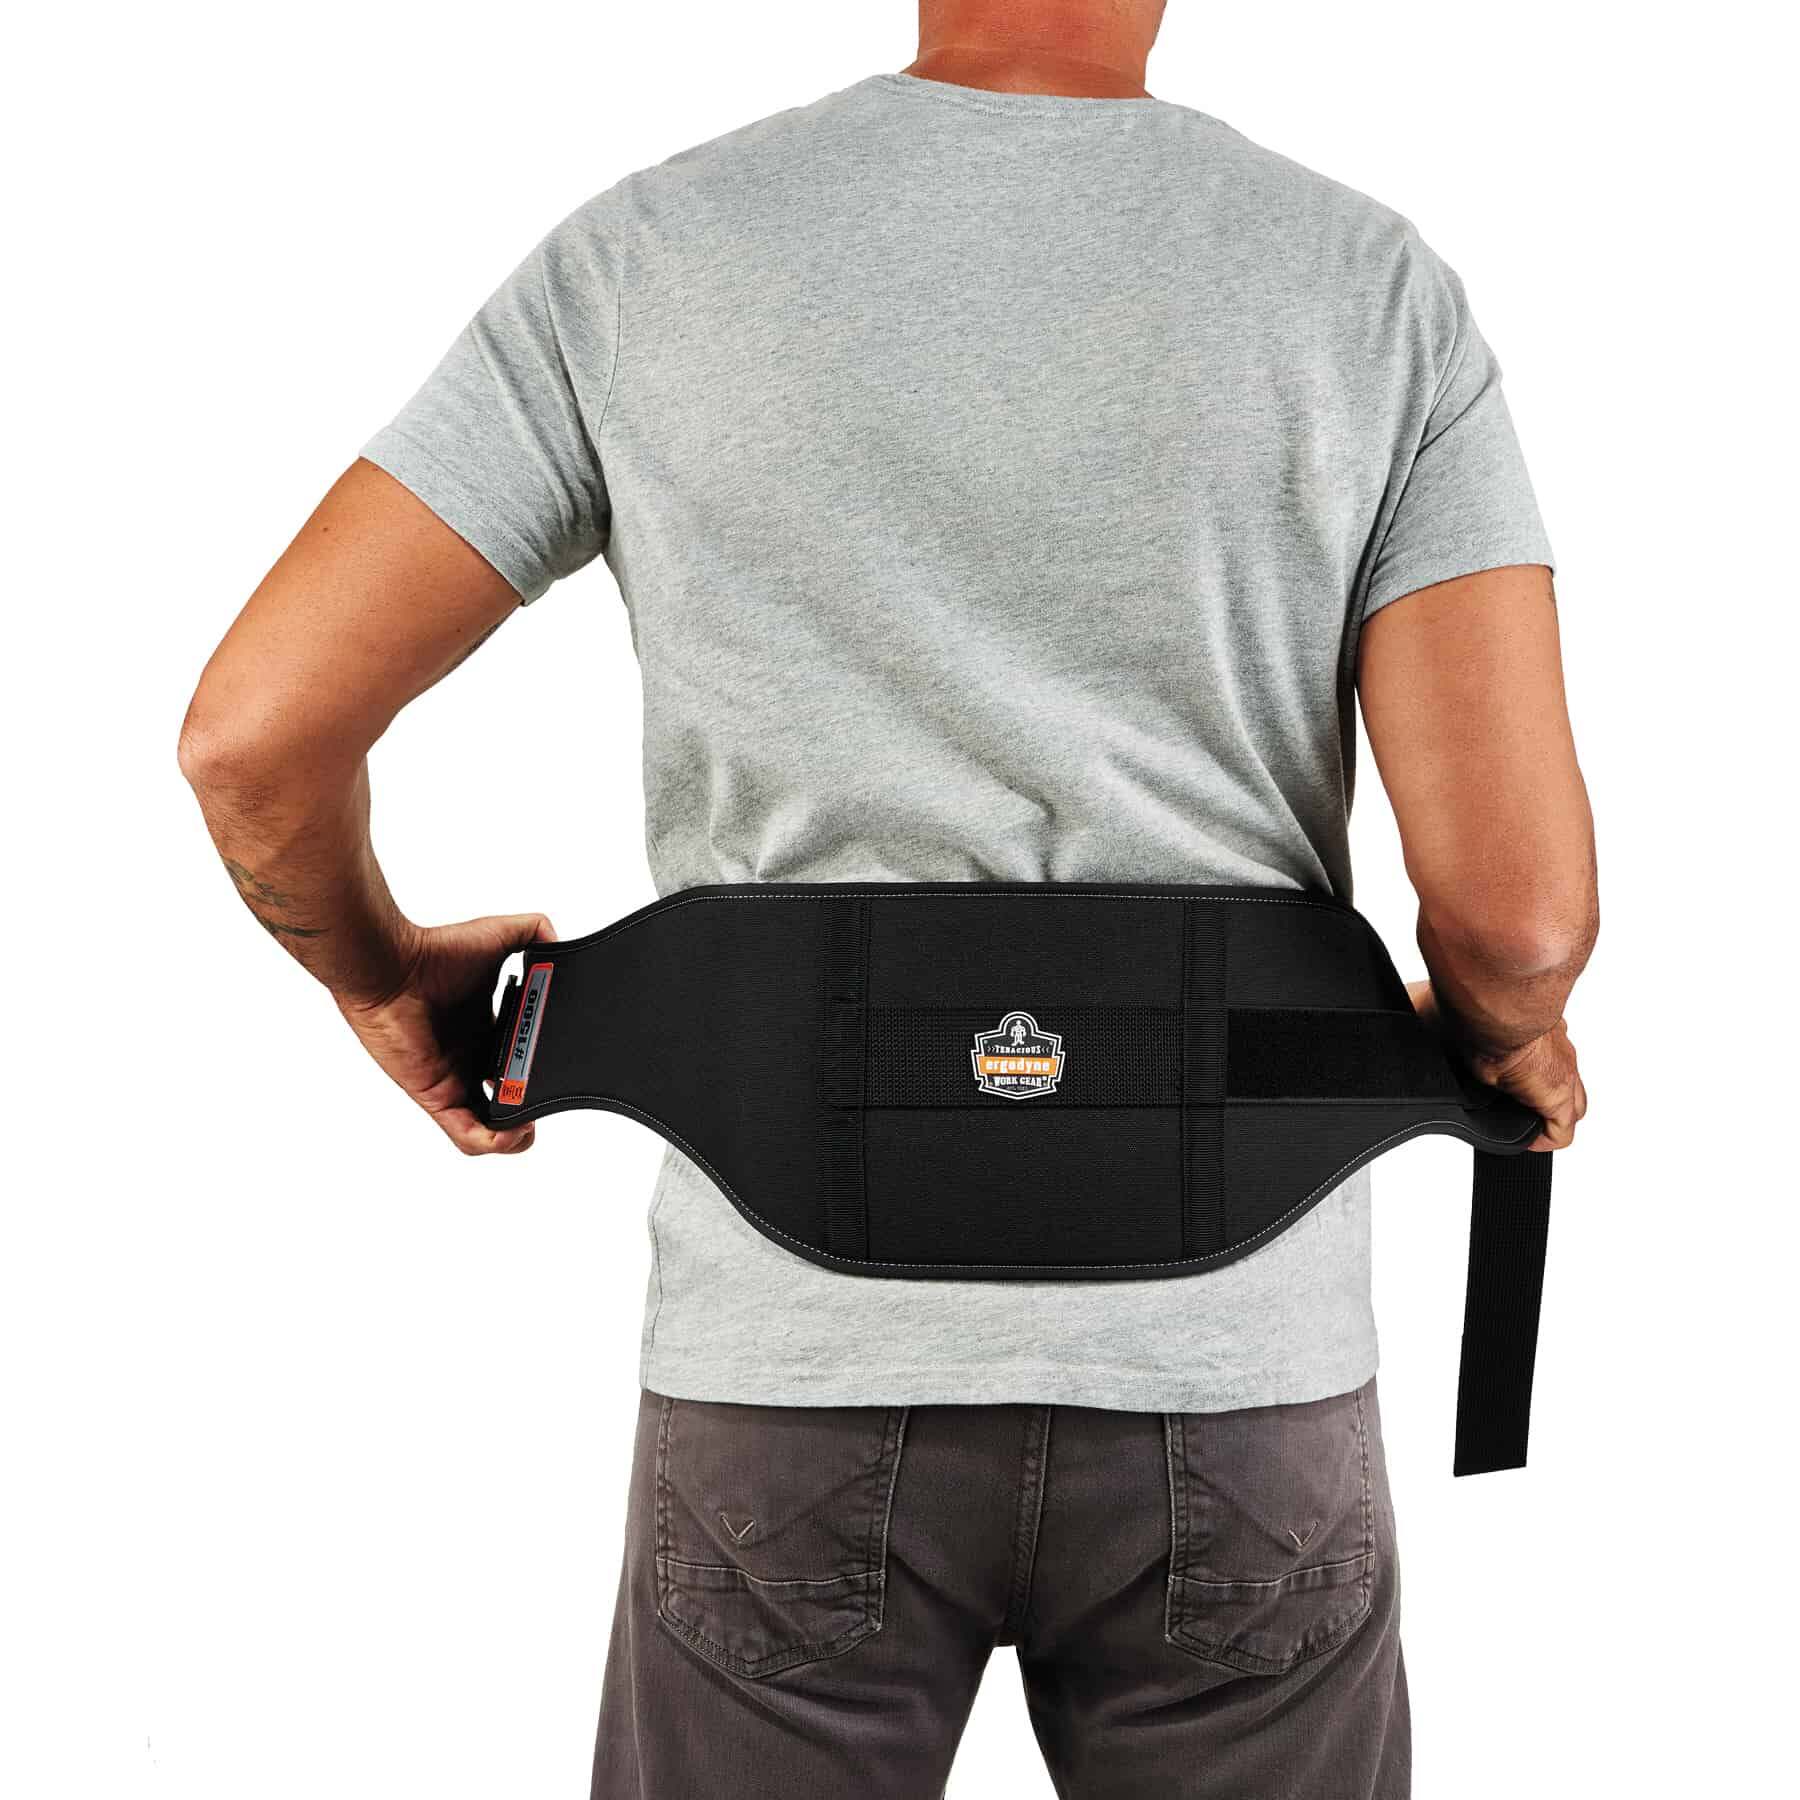 Back Support Belts - Back Belt Latest Price, Manufacturers & Suppliers